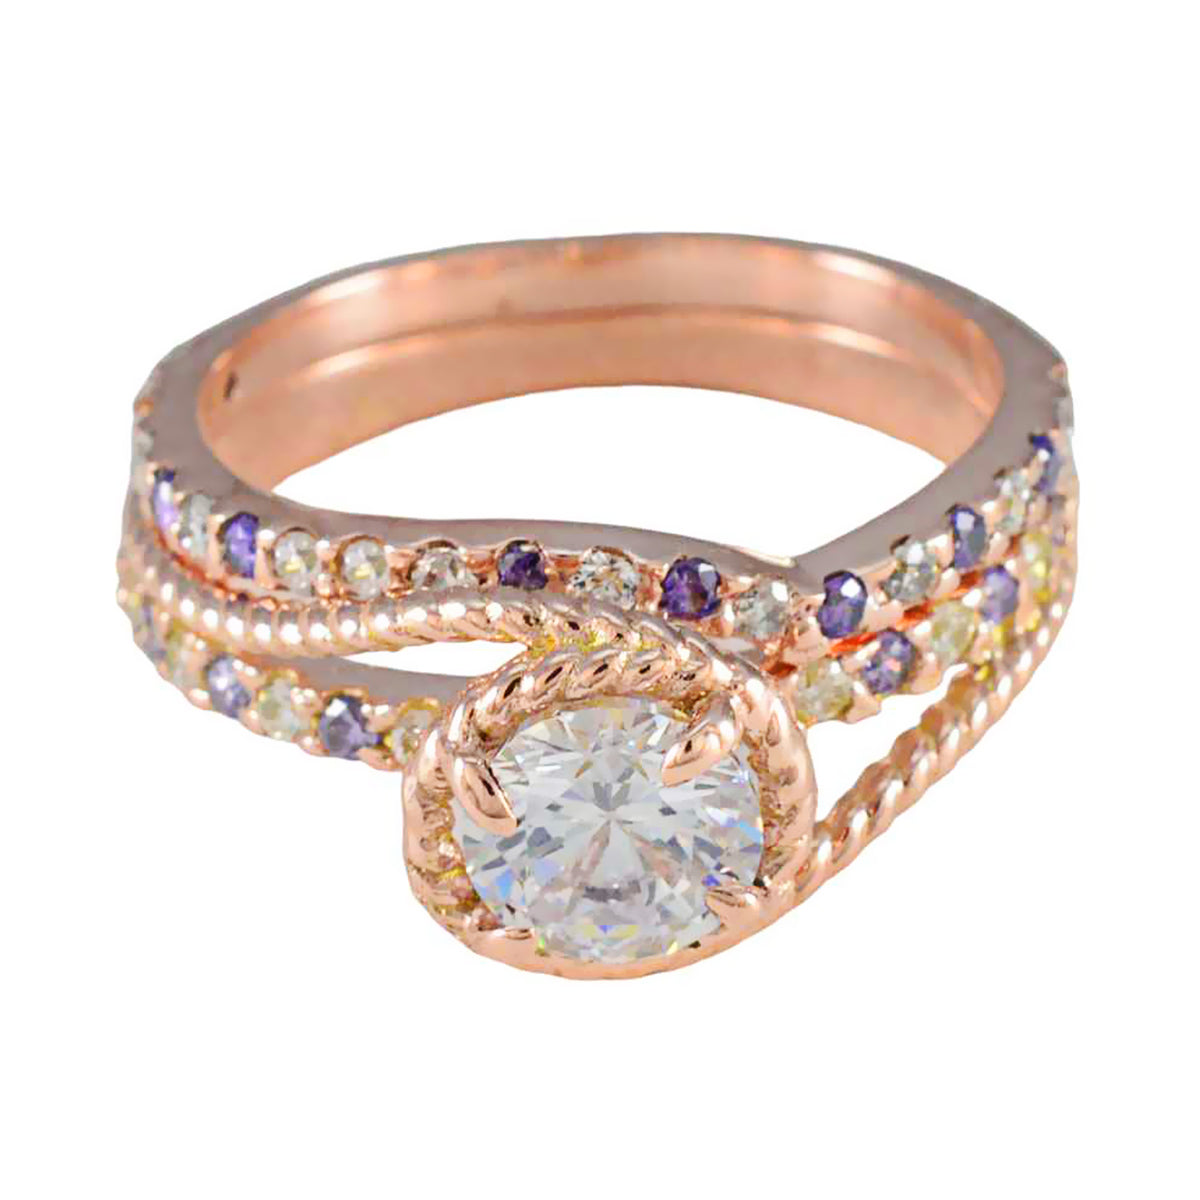 Riyo Perfecte zilveren ring met roségoudkleurige Amethiststeen Ronde vorm Prong Setting Sieraden Verjaardagsring